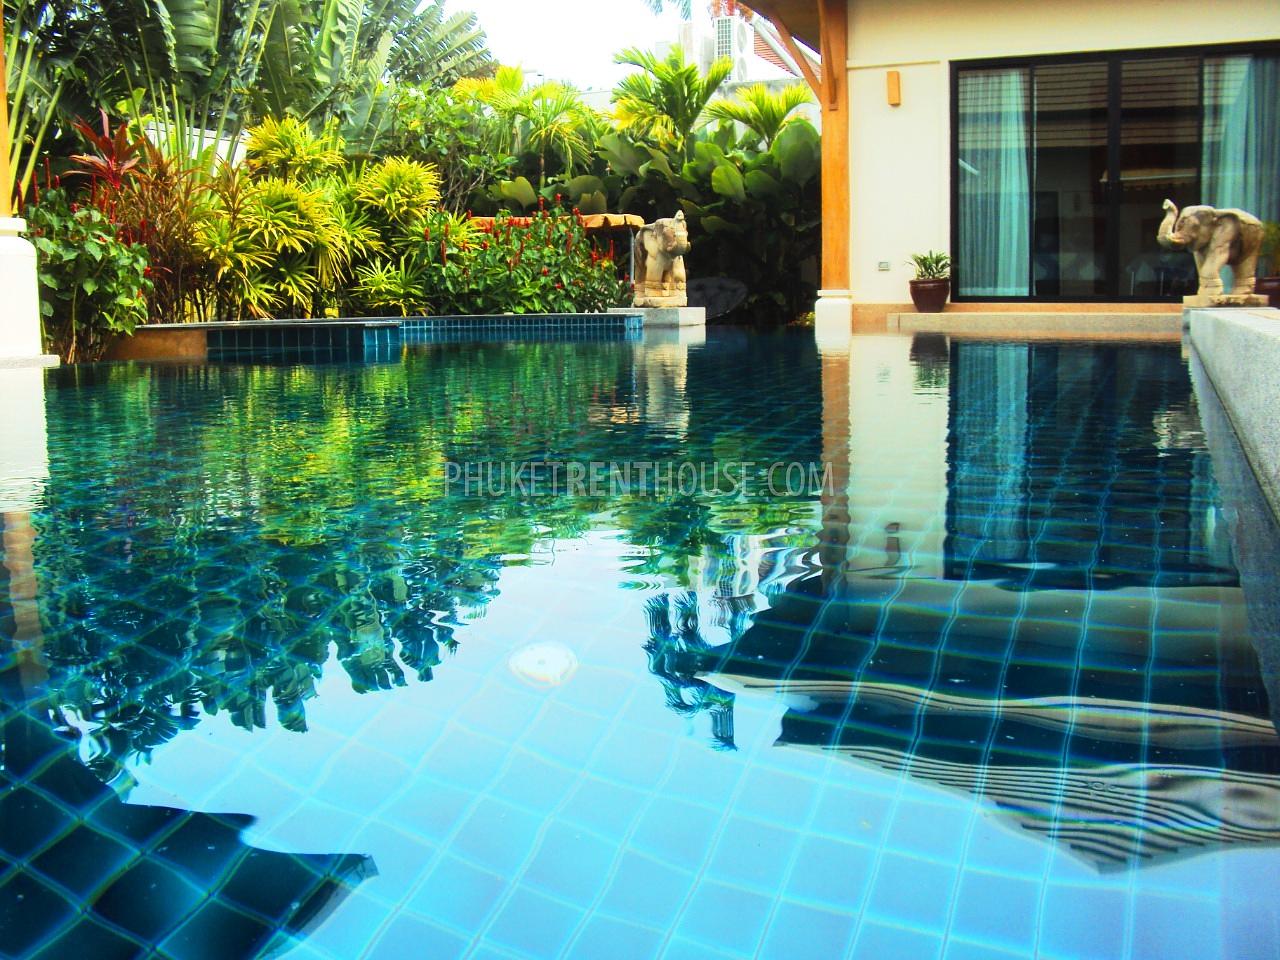 NAI20937: 3 Bedroom Villa with Pool and Beautiful Garden in Nai Harn. Photo #2